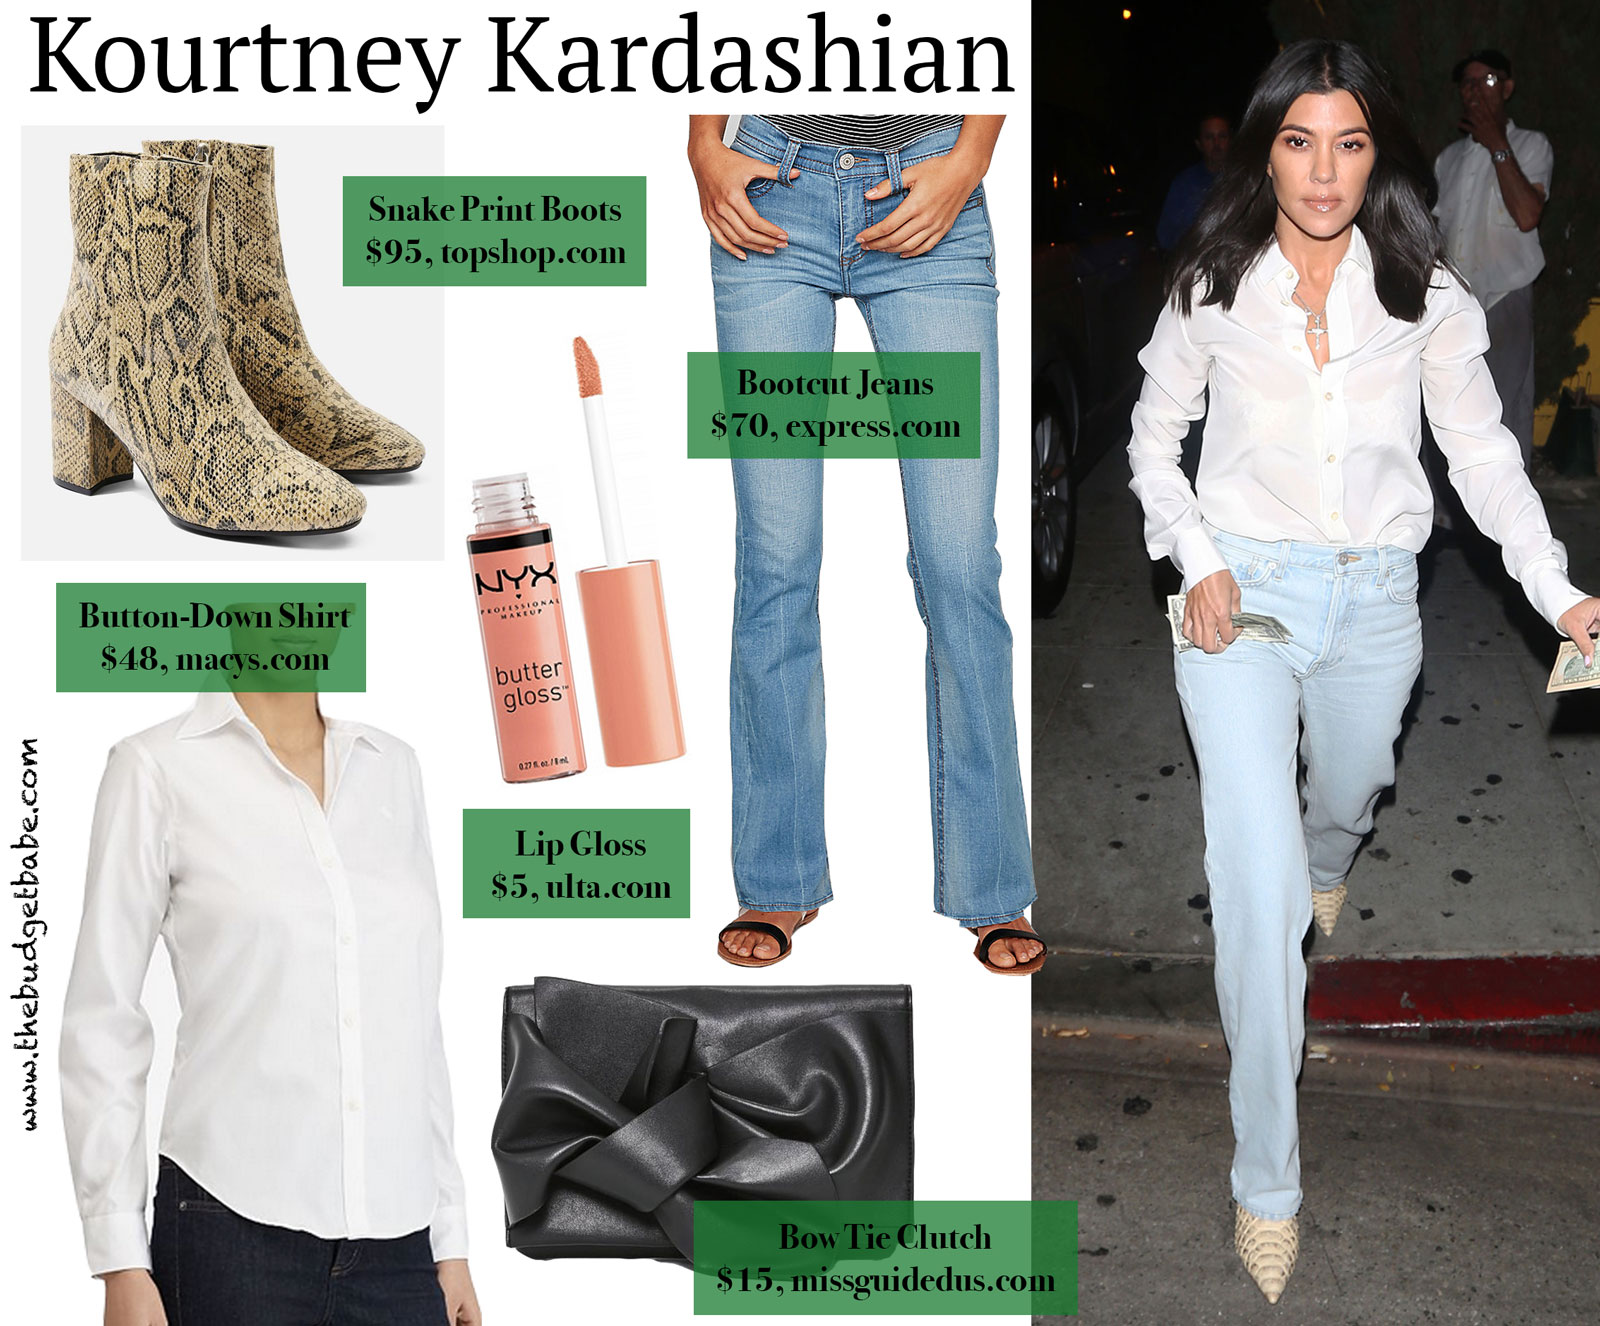 Kourtney Kardashian Python Boots and White Shirt Look for Less